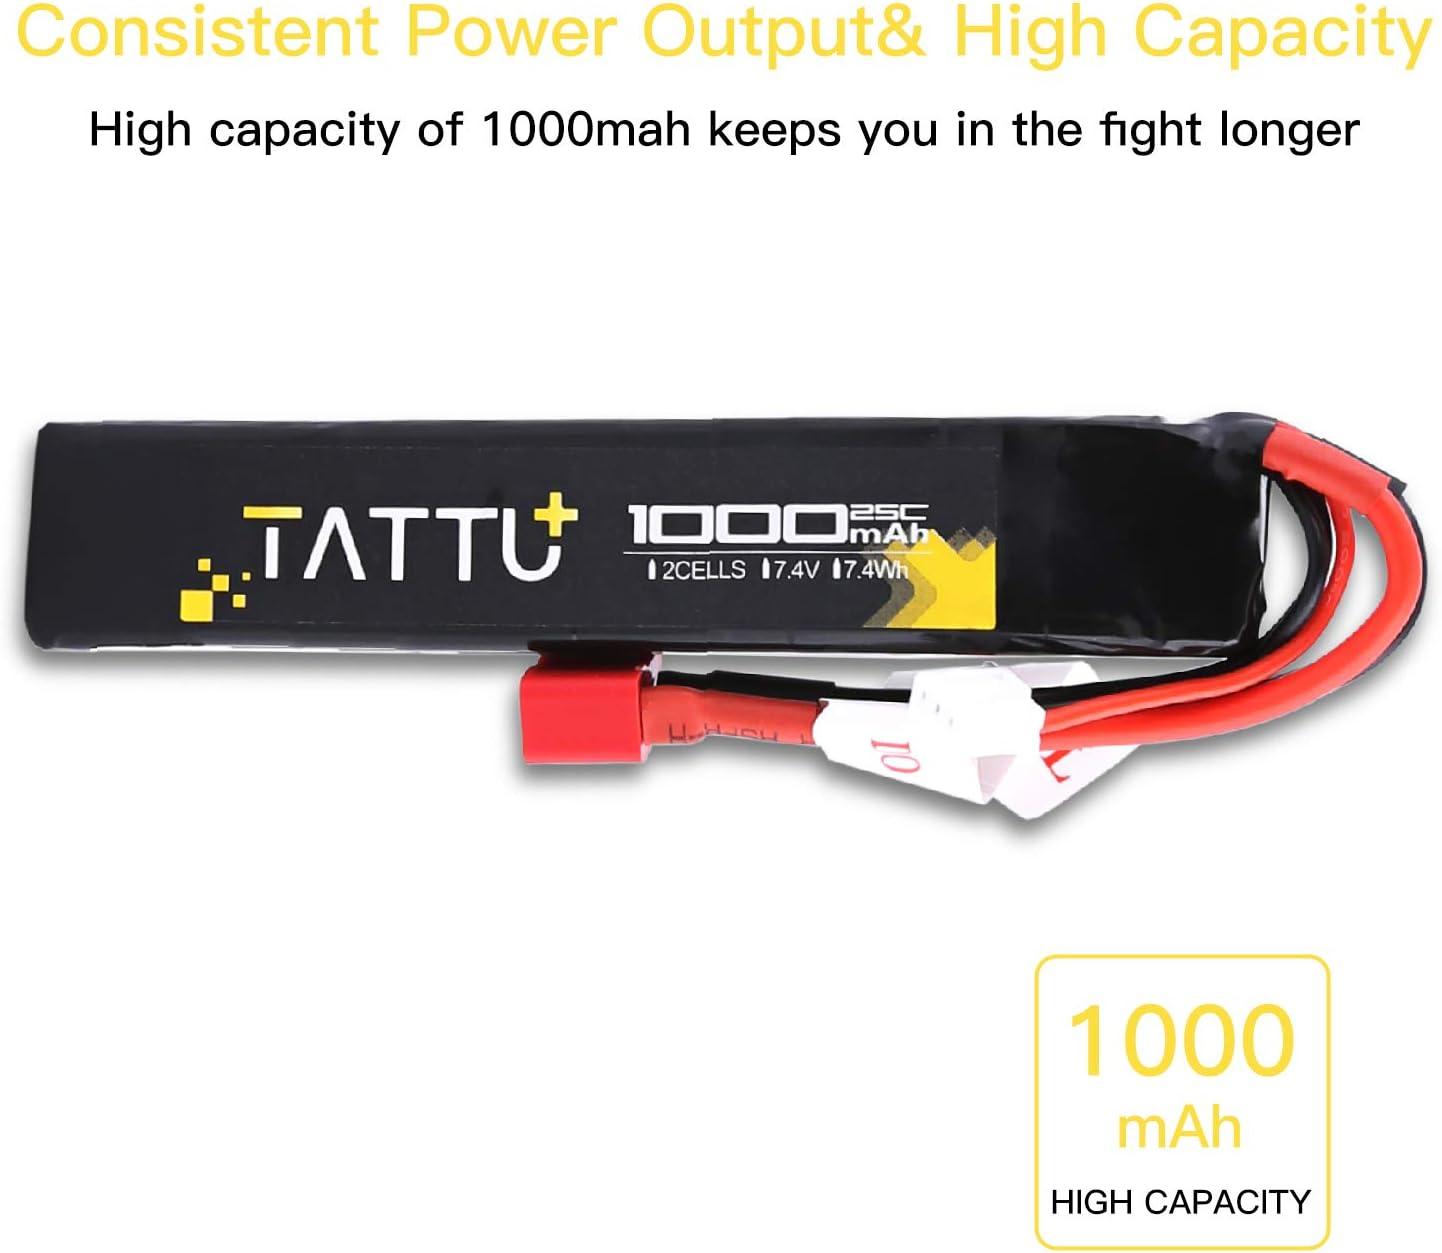 7.4V 1000mAh LiPo Stick Airsoft Battery